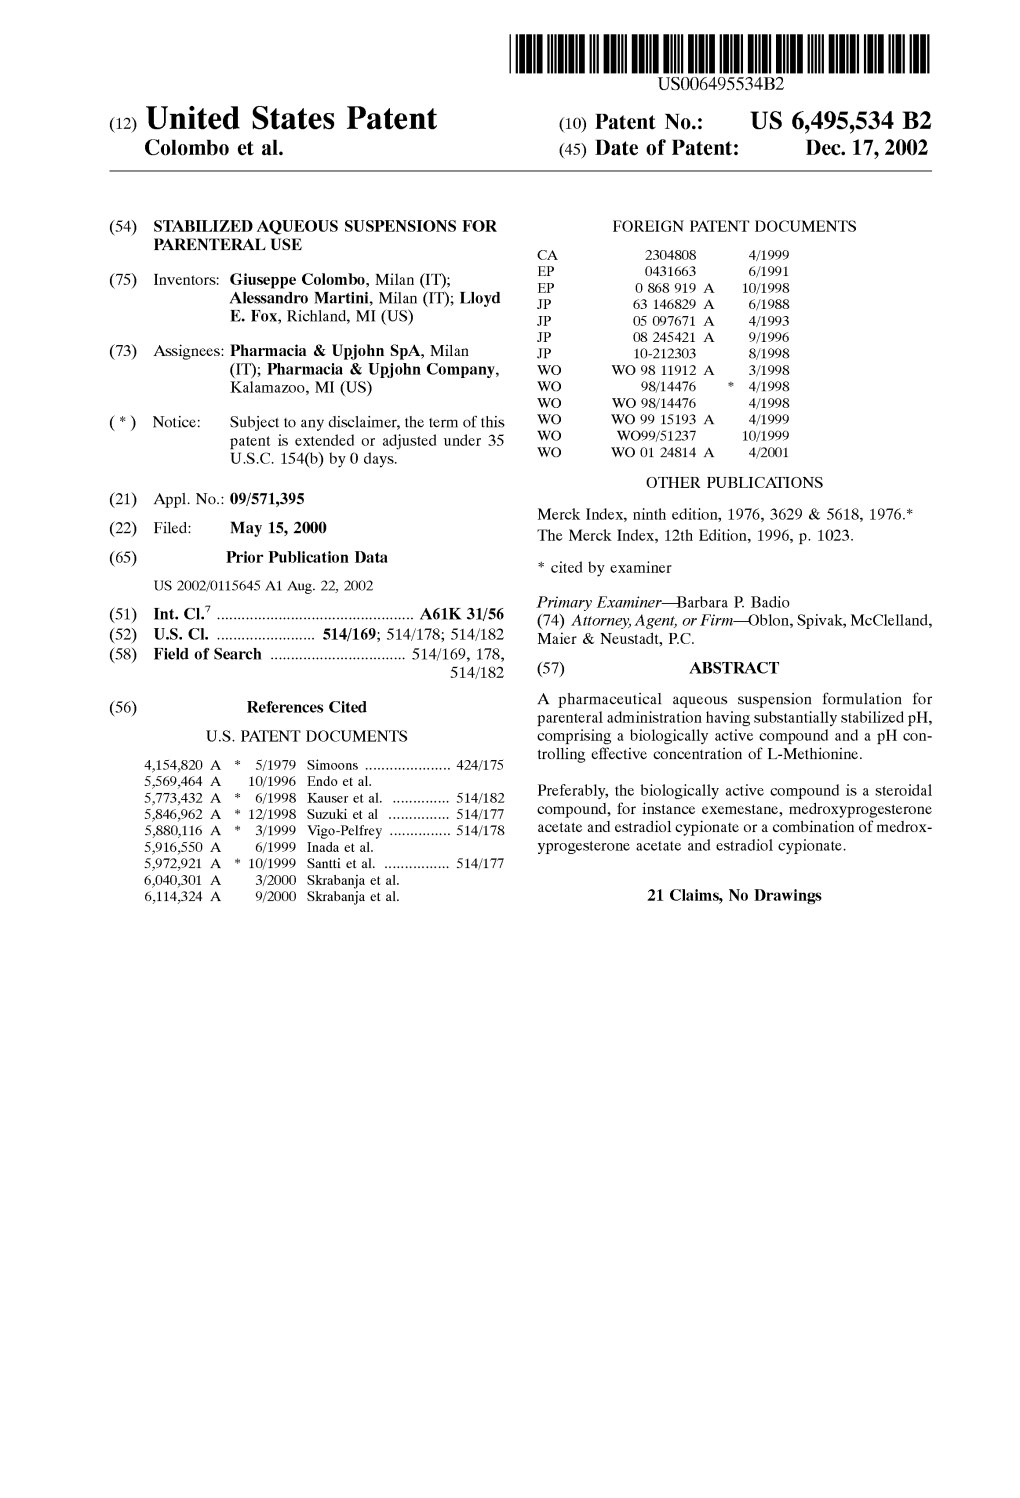 (12) United States Patent (10) Patent No.: US 6,495,534 B2 Colombo Et Al